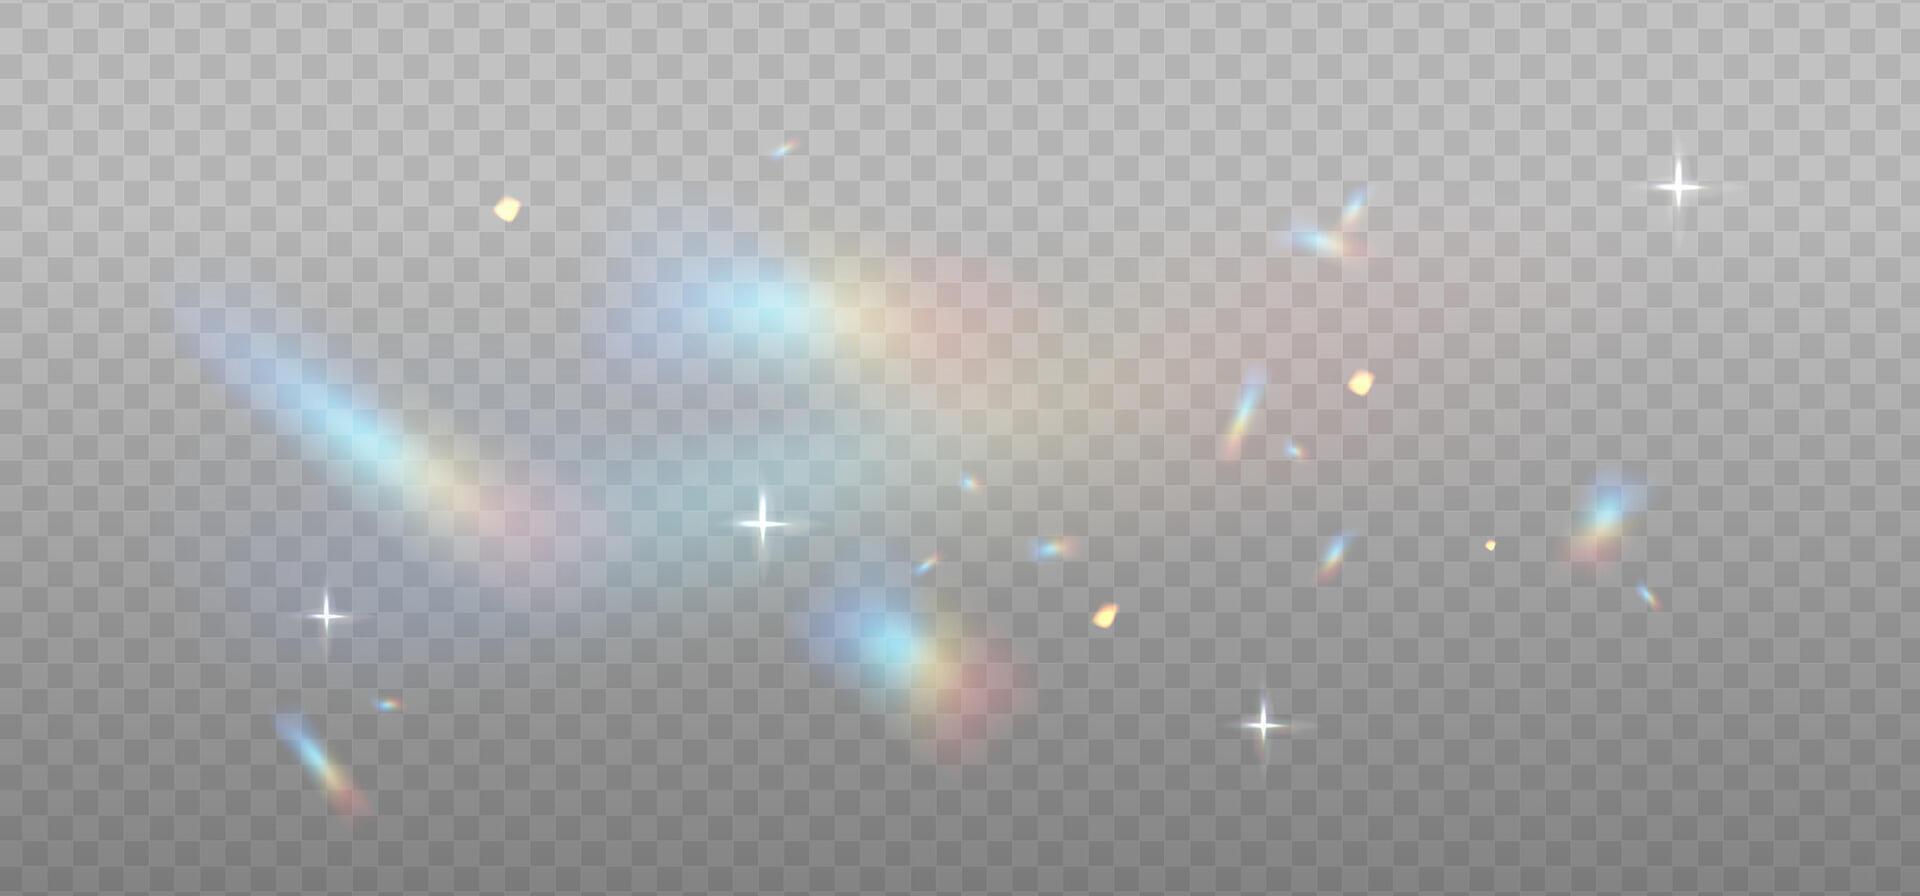 arco iris reflexión ligero prisma efecto en ligero antecedentes. holograma vaso dispersión, cristal llamarada fuga sombra cubrir. ilustración vector